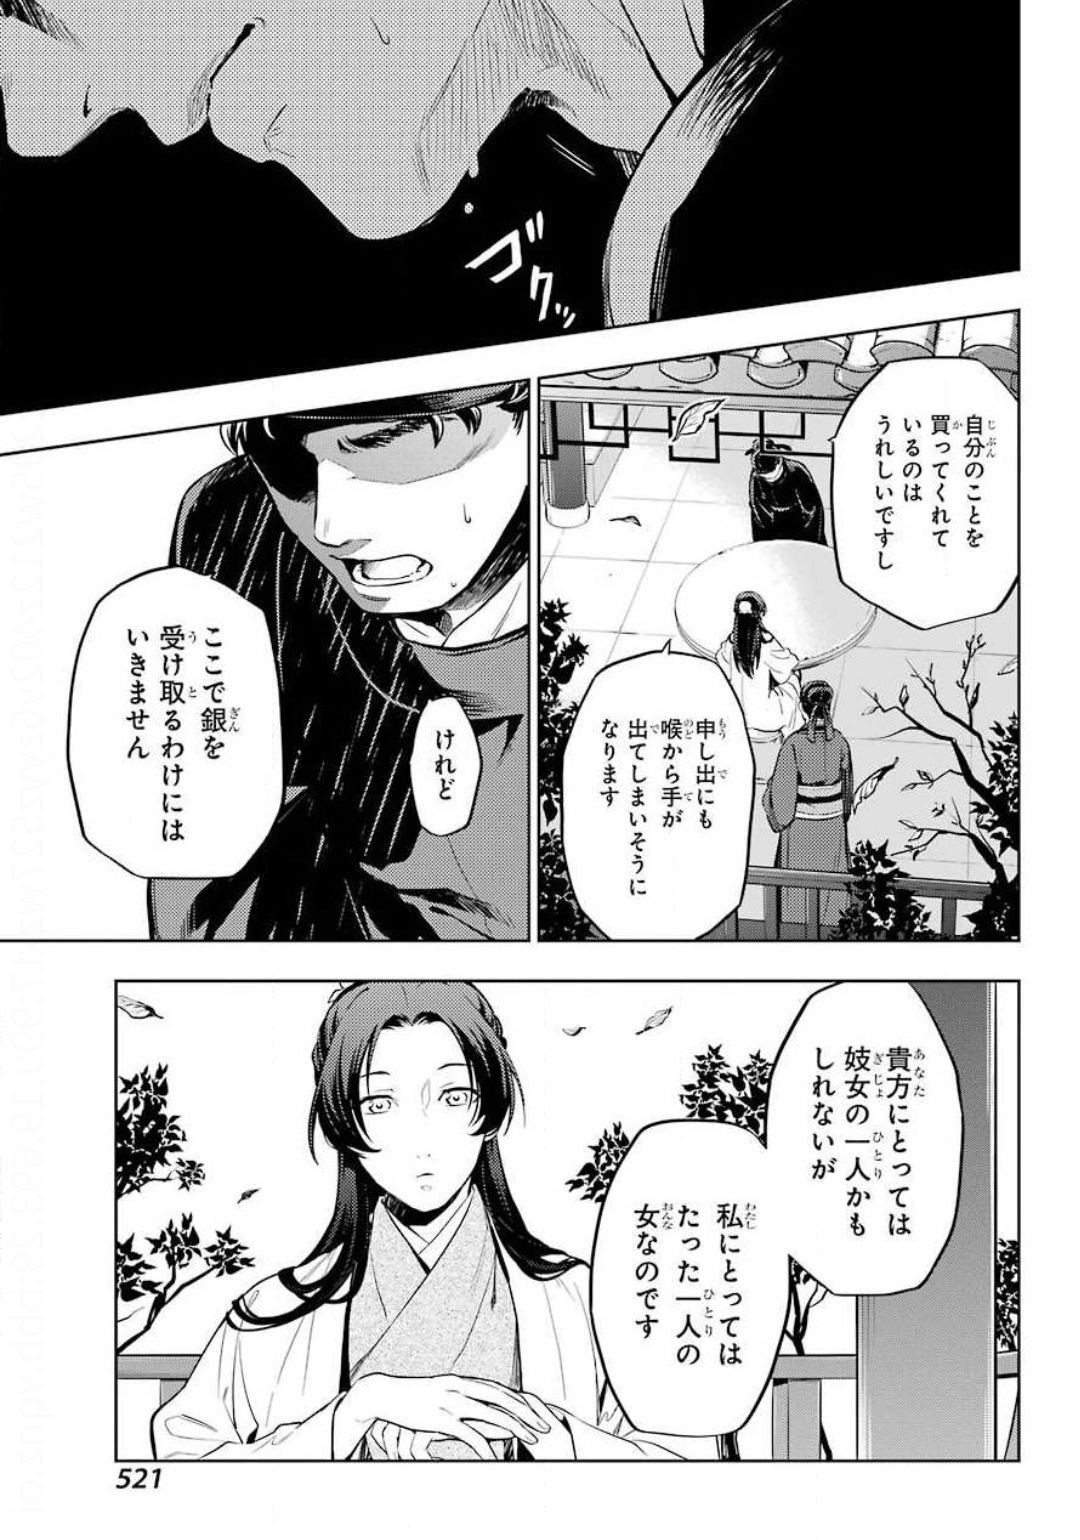 Kusuriya no Hitorigoto - Chapter 35-2 - Page 29